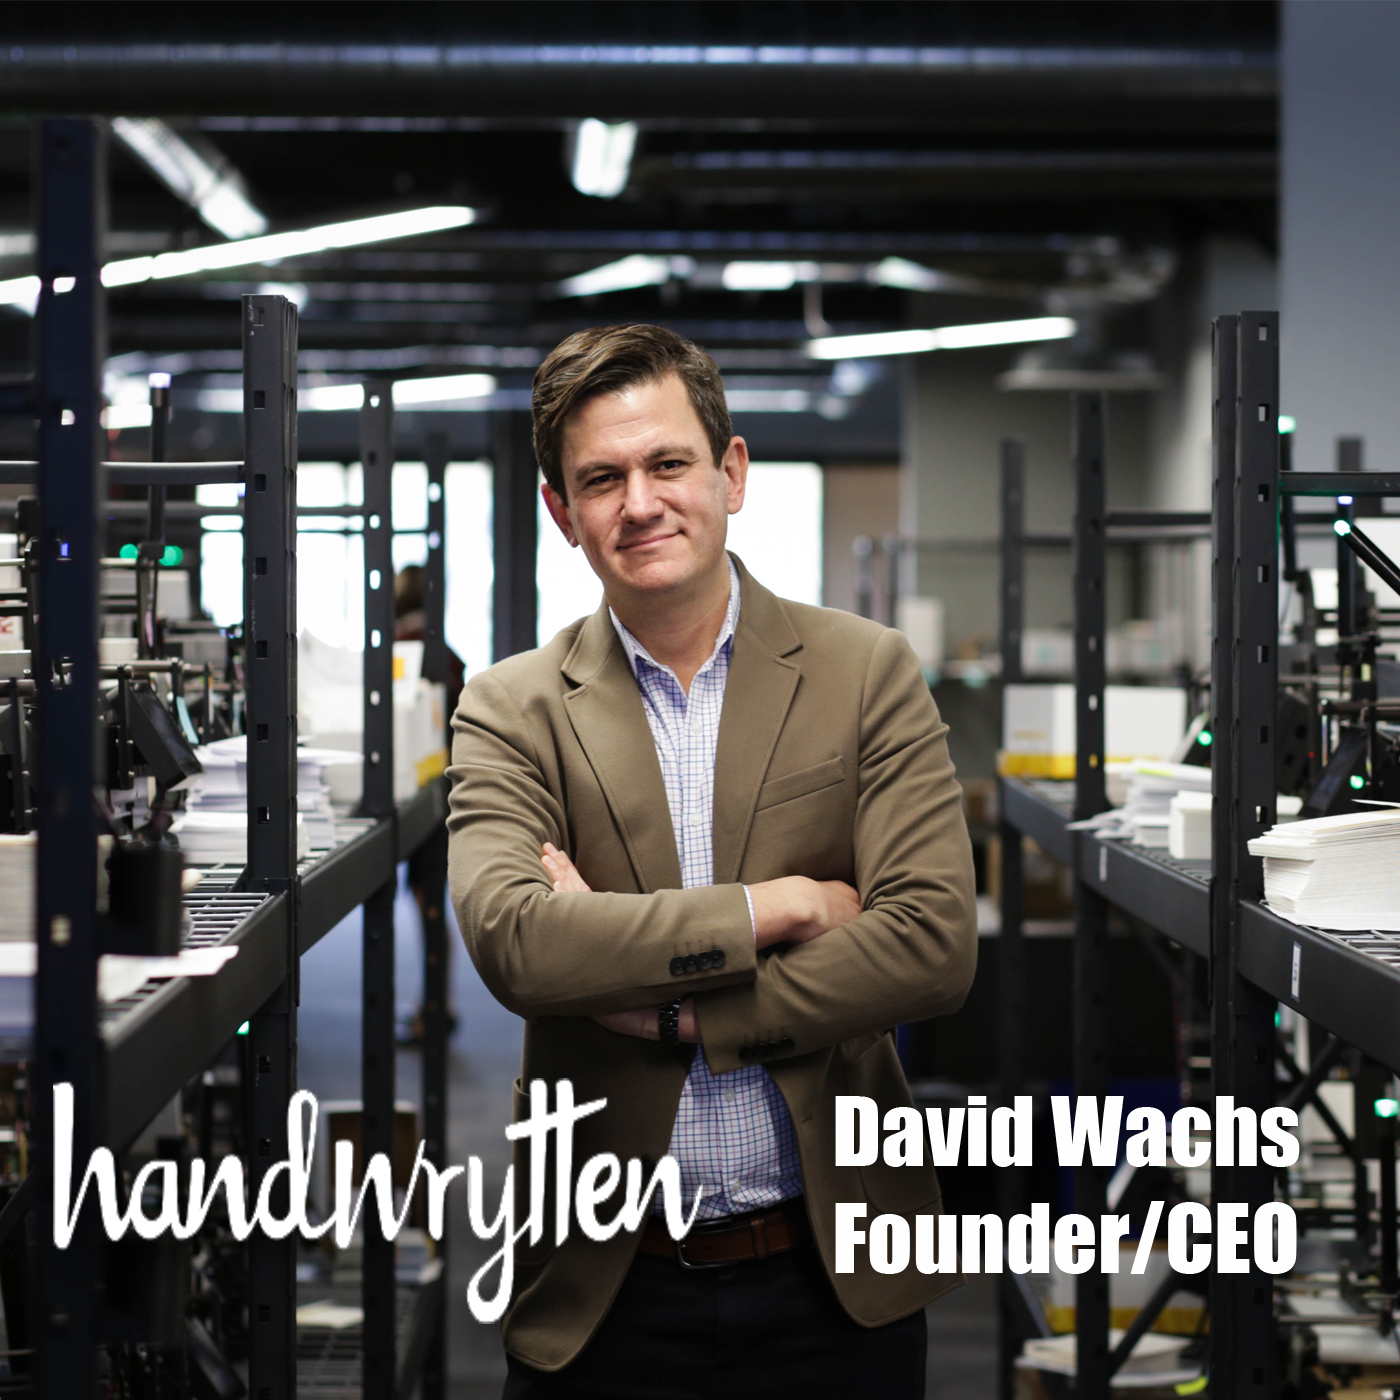 CEO and Founder David Wachs of Handwrytten on the TechtalkRadio Show